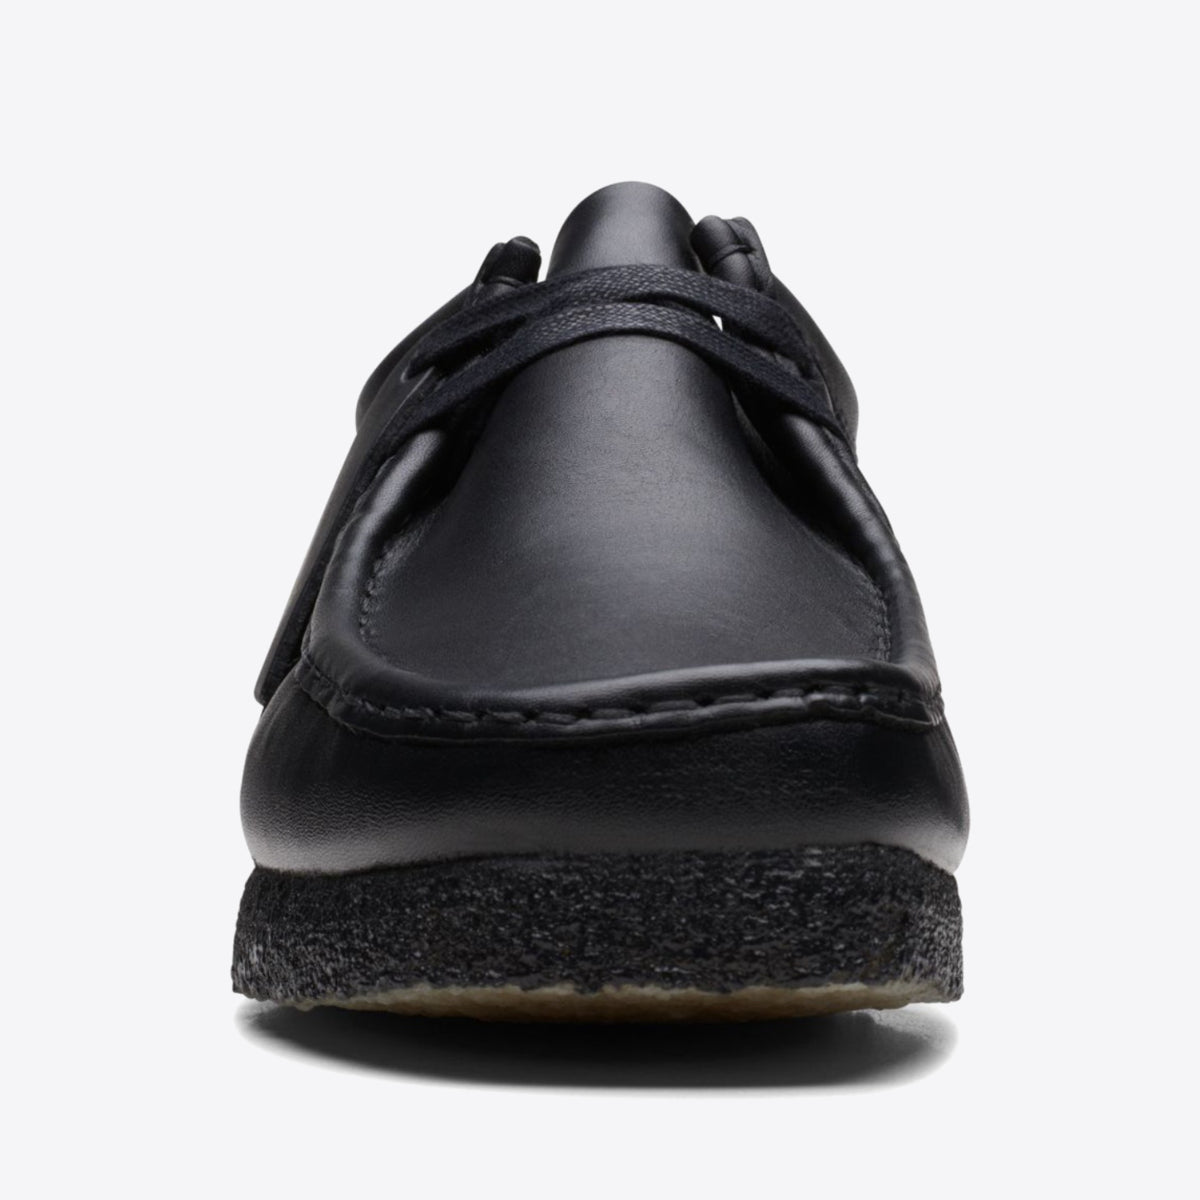 CLARKS Wallabee Shoe Leather Black - Image 3